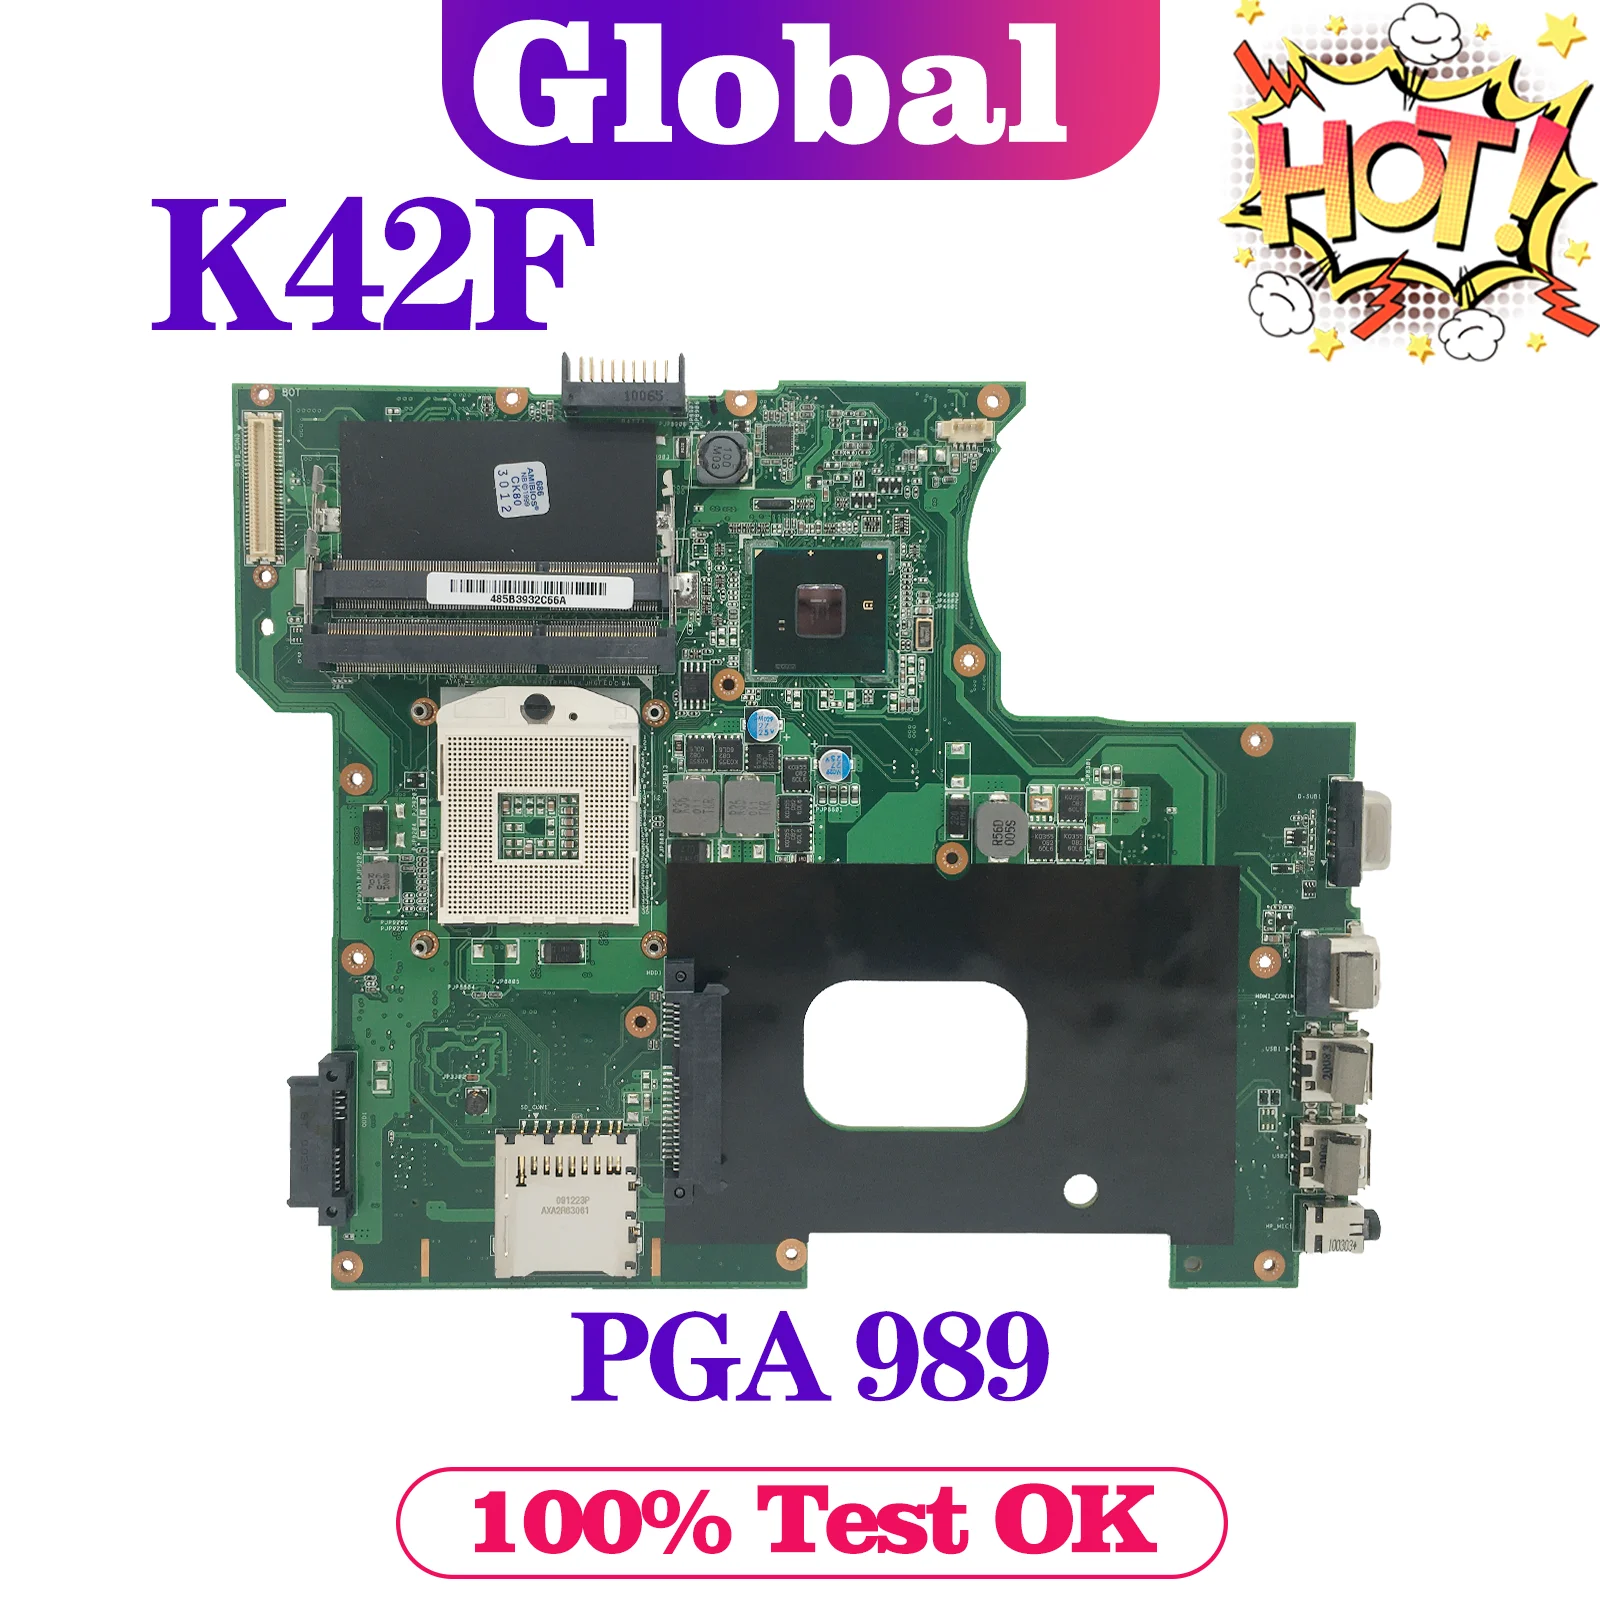 KEFU Notebook K42F Mainboard  For ASUS X42F U42F A42F P42F Laptop Motherboard HM55 PGA-989 Original Main Board 100% Test OK